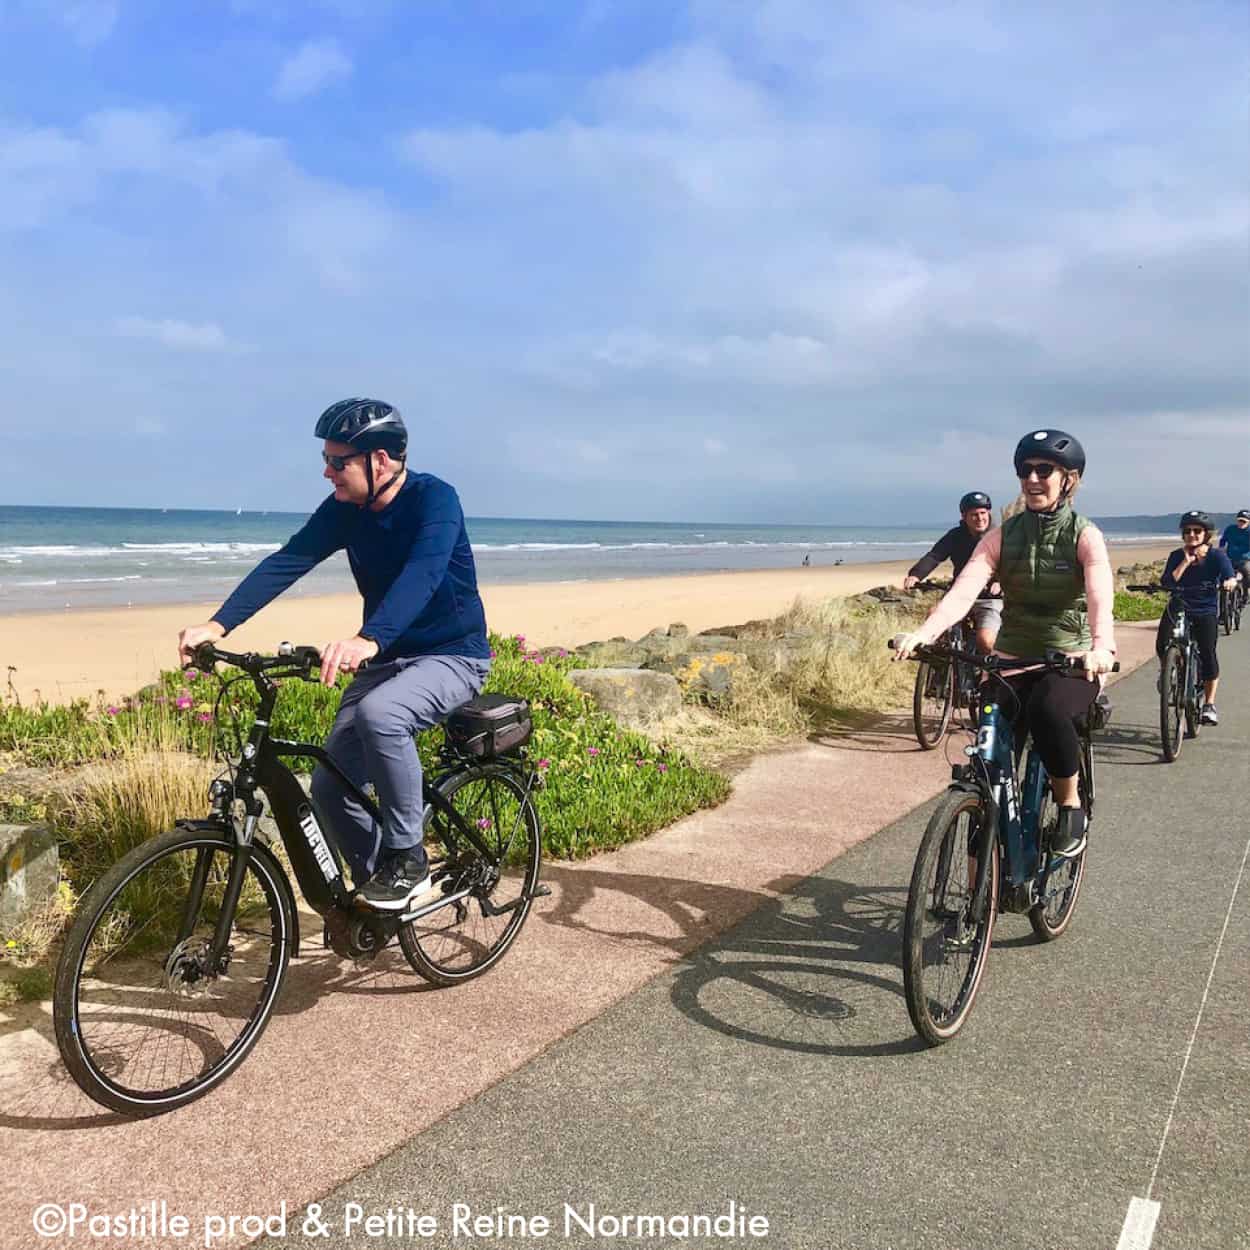 bike tour normandy beaches